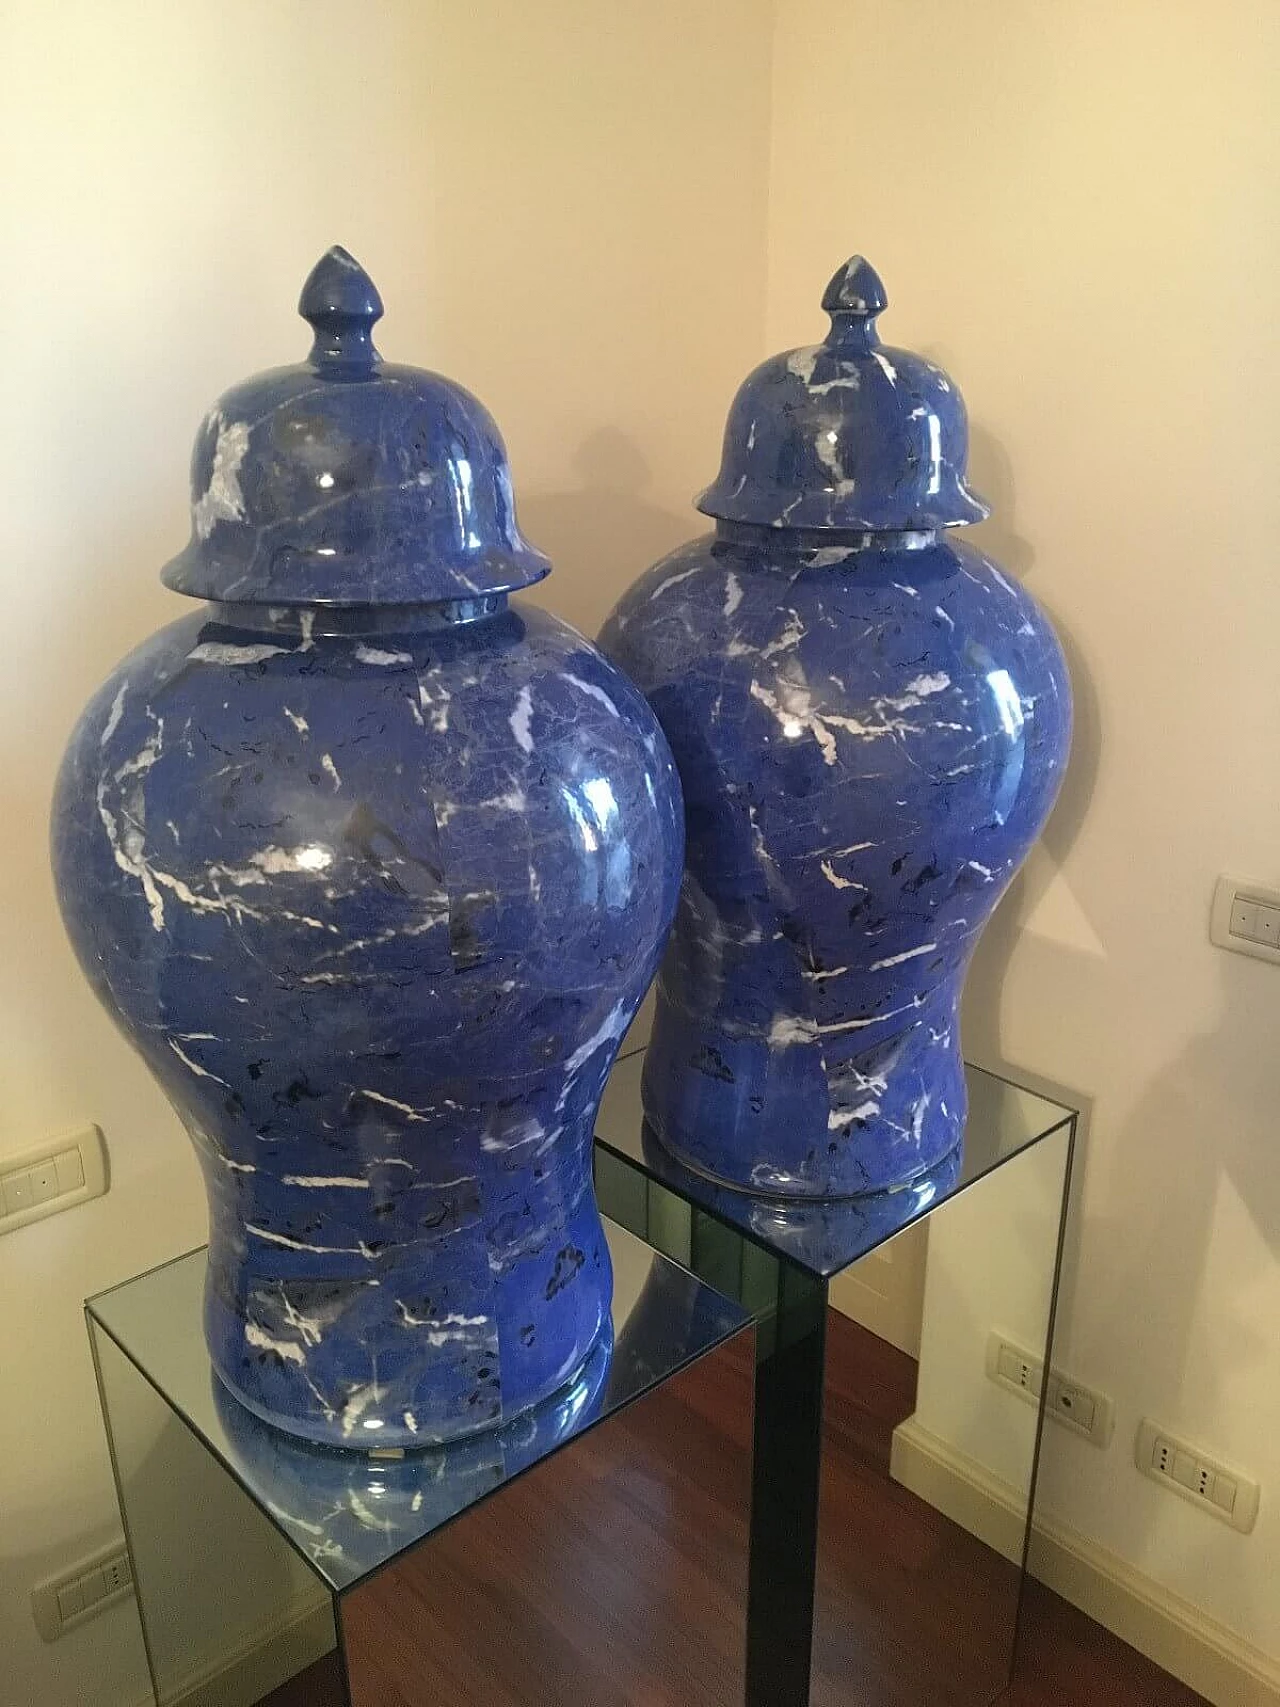 Pair of vases with blue marbled ceramic lids 5